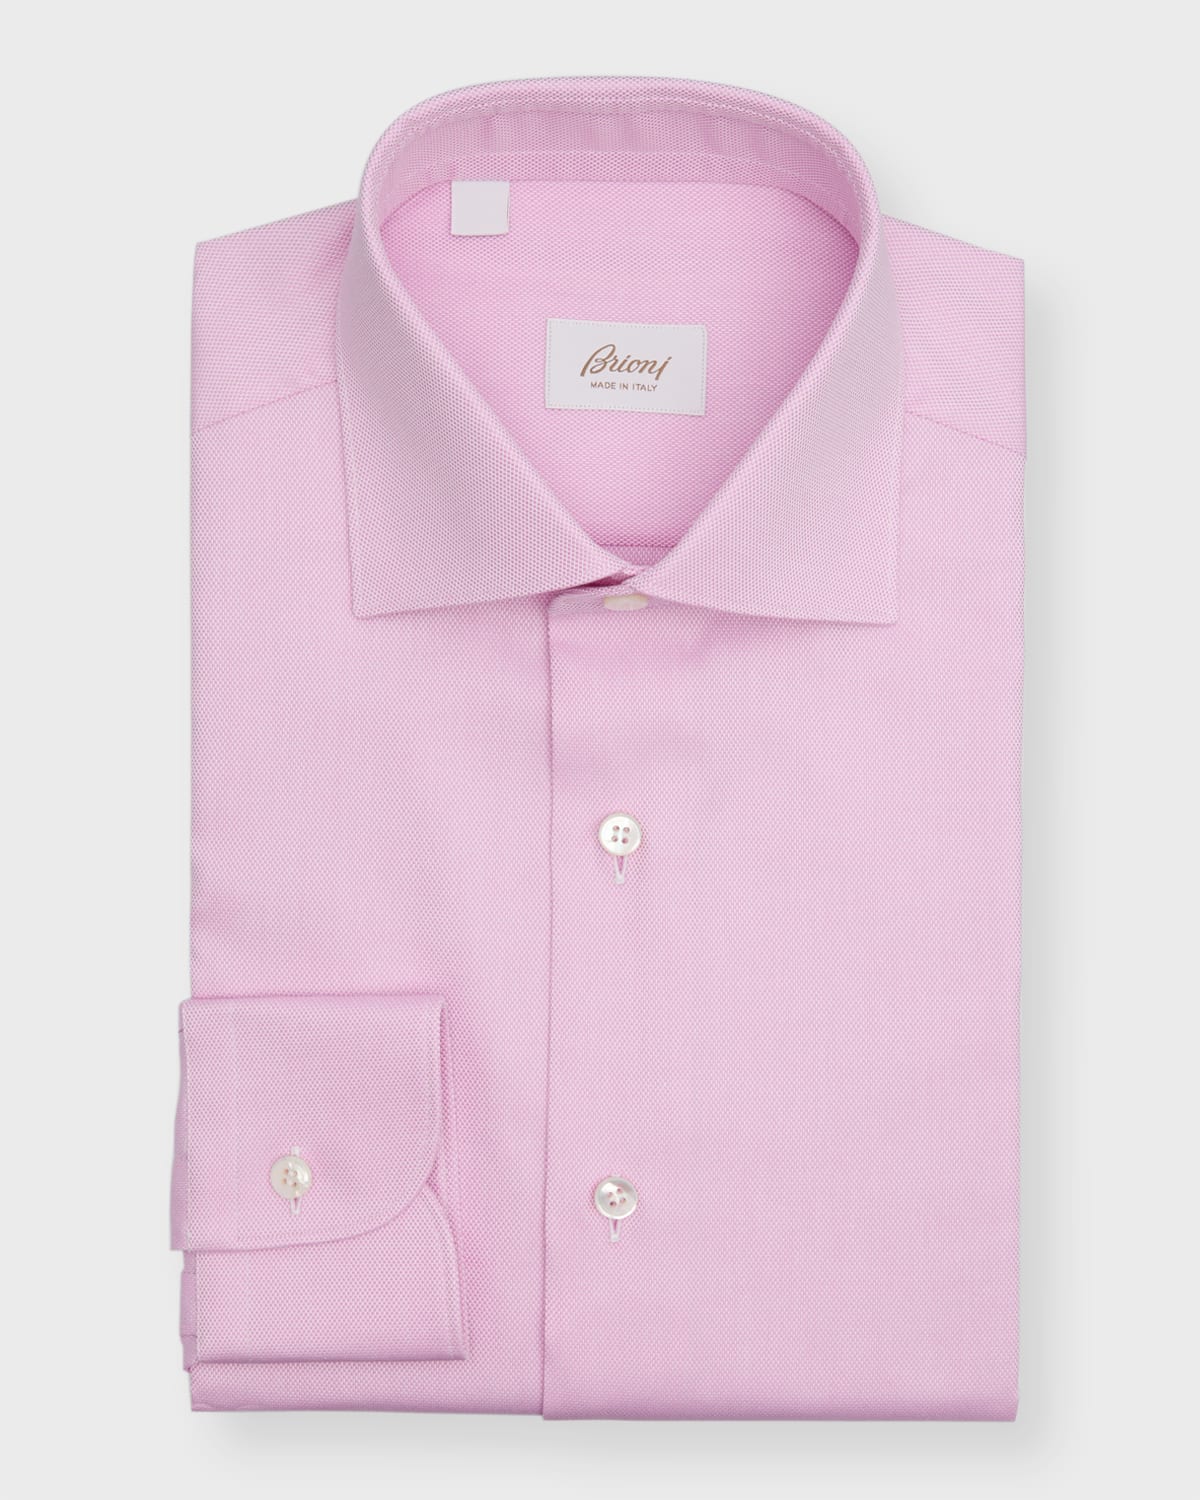 Men's Cotton Oxford Dress Shirt